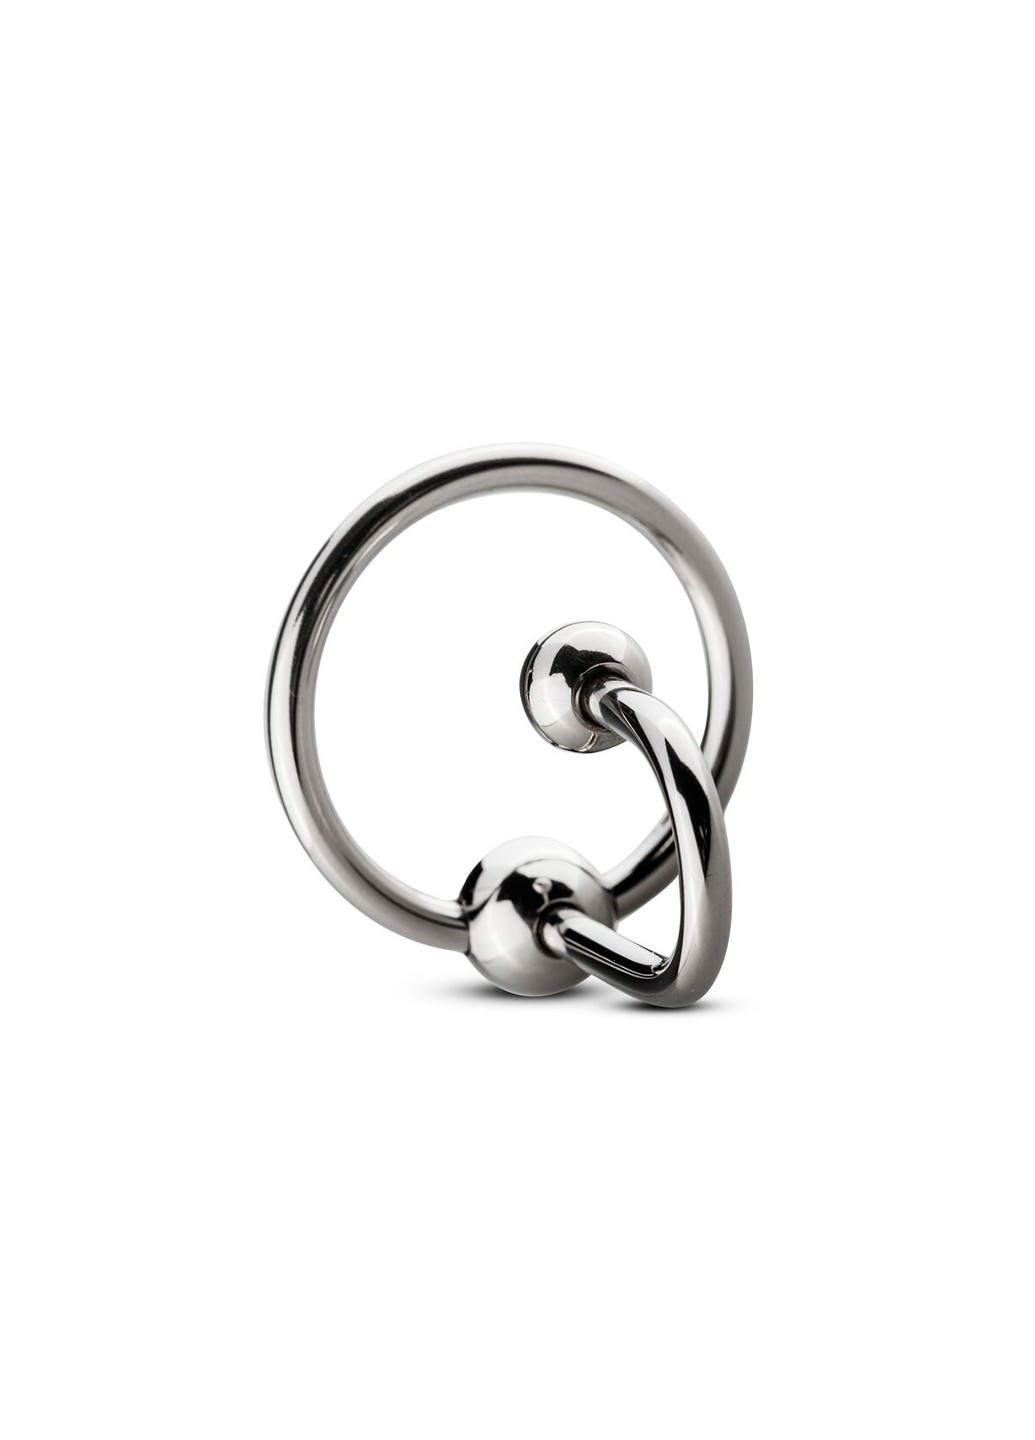 Уретральная вставка с кольцом - Sperm Stopper Solid, диаметр кольца 2,6см Sinner Gear Unbendable (277236332)